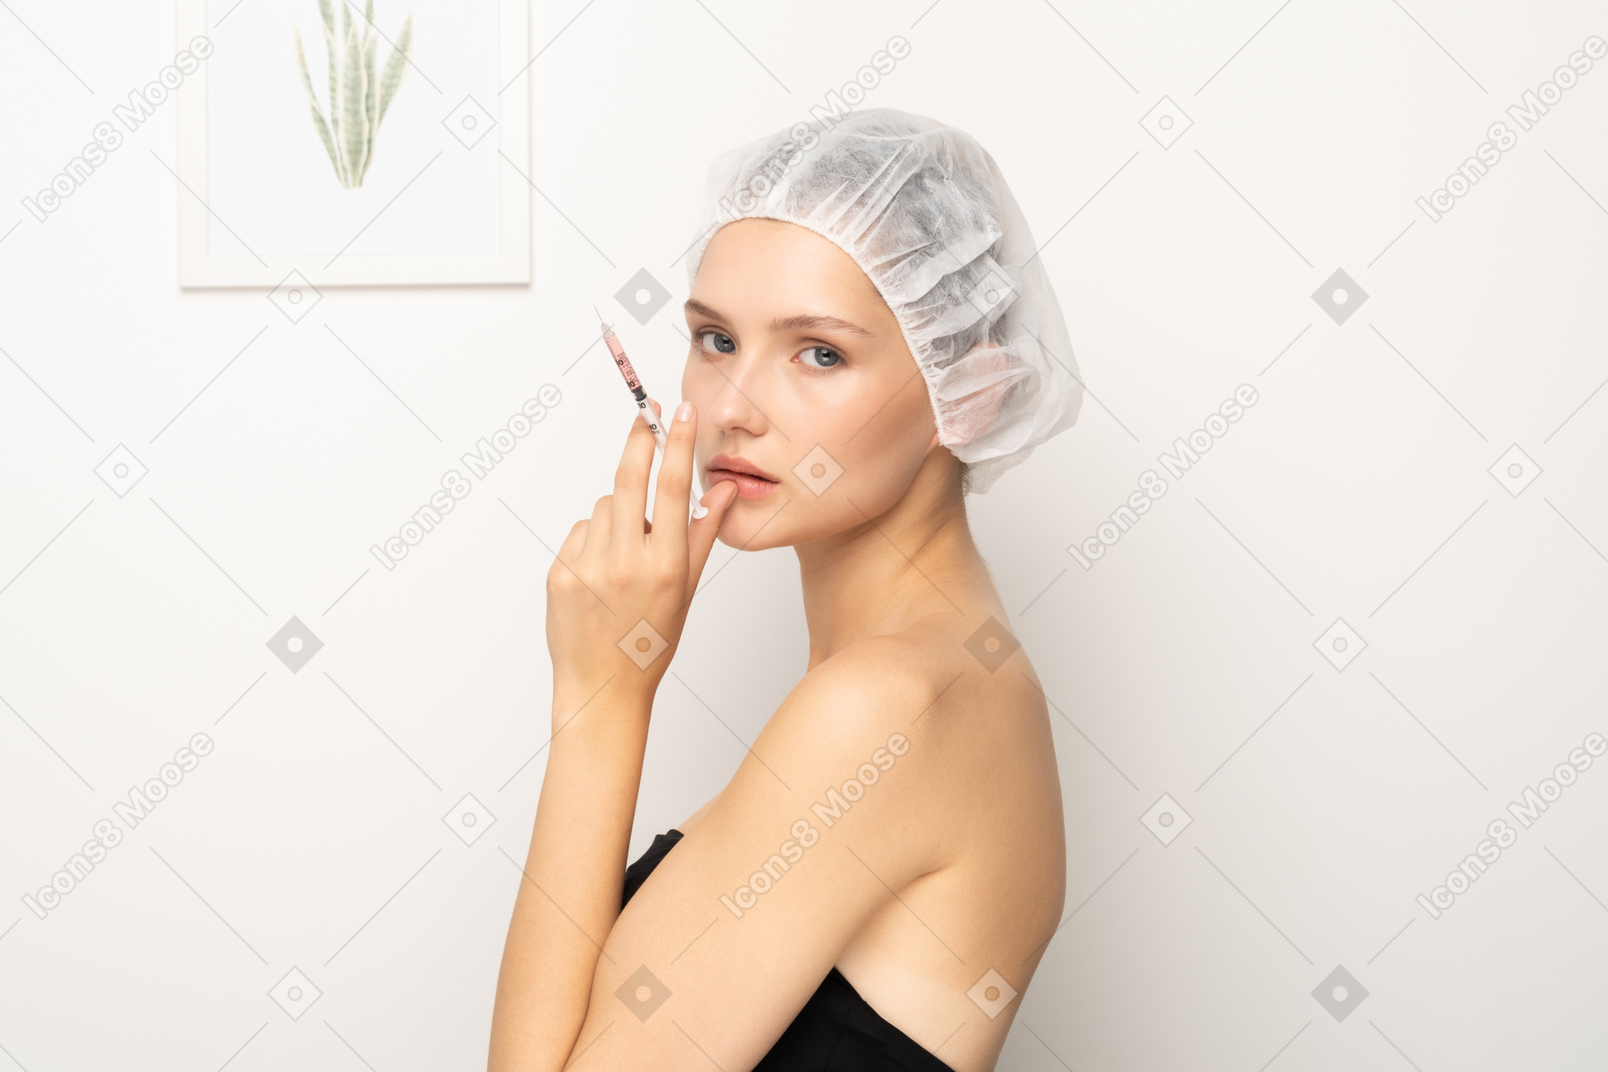 Woman holding syringe while looking at camera